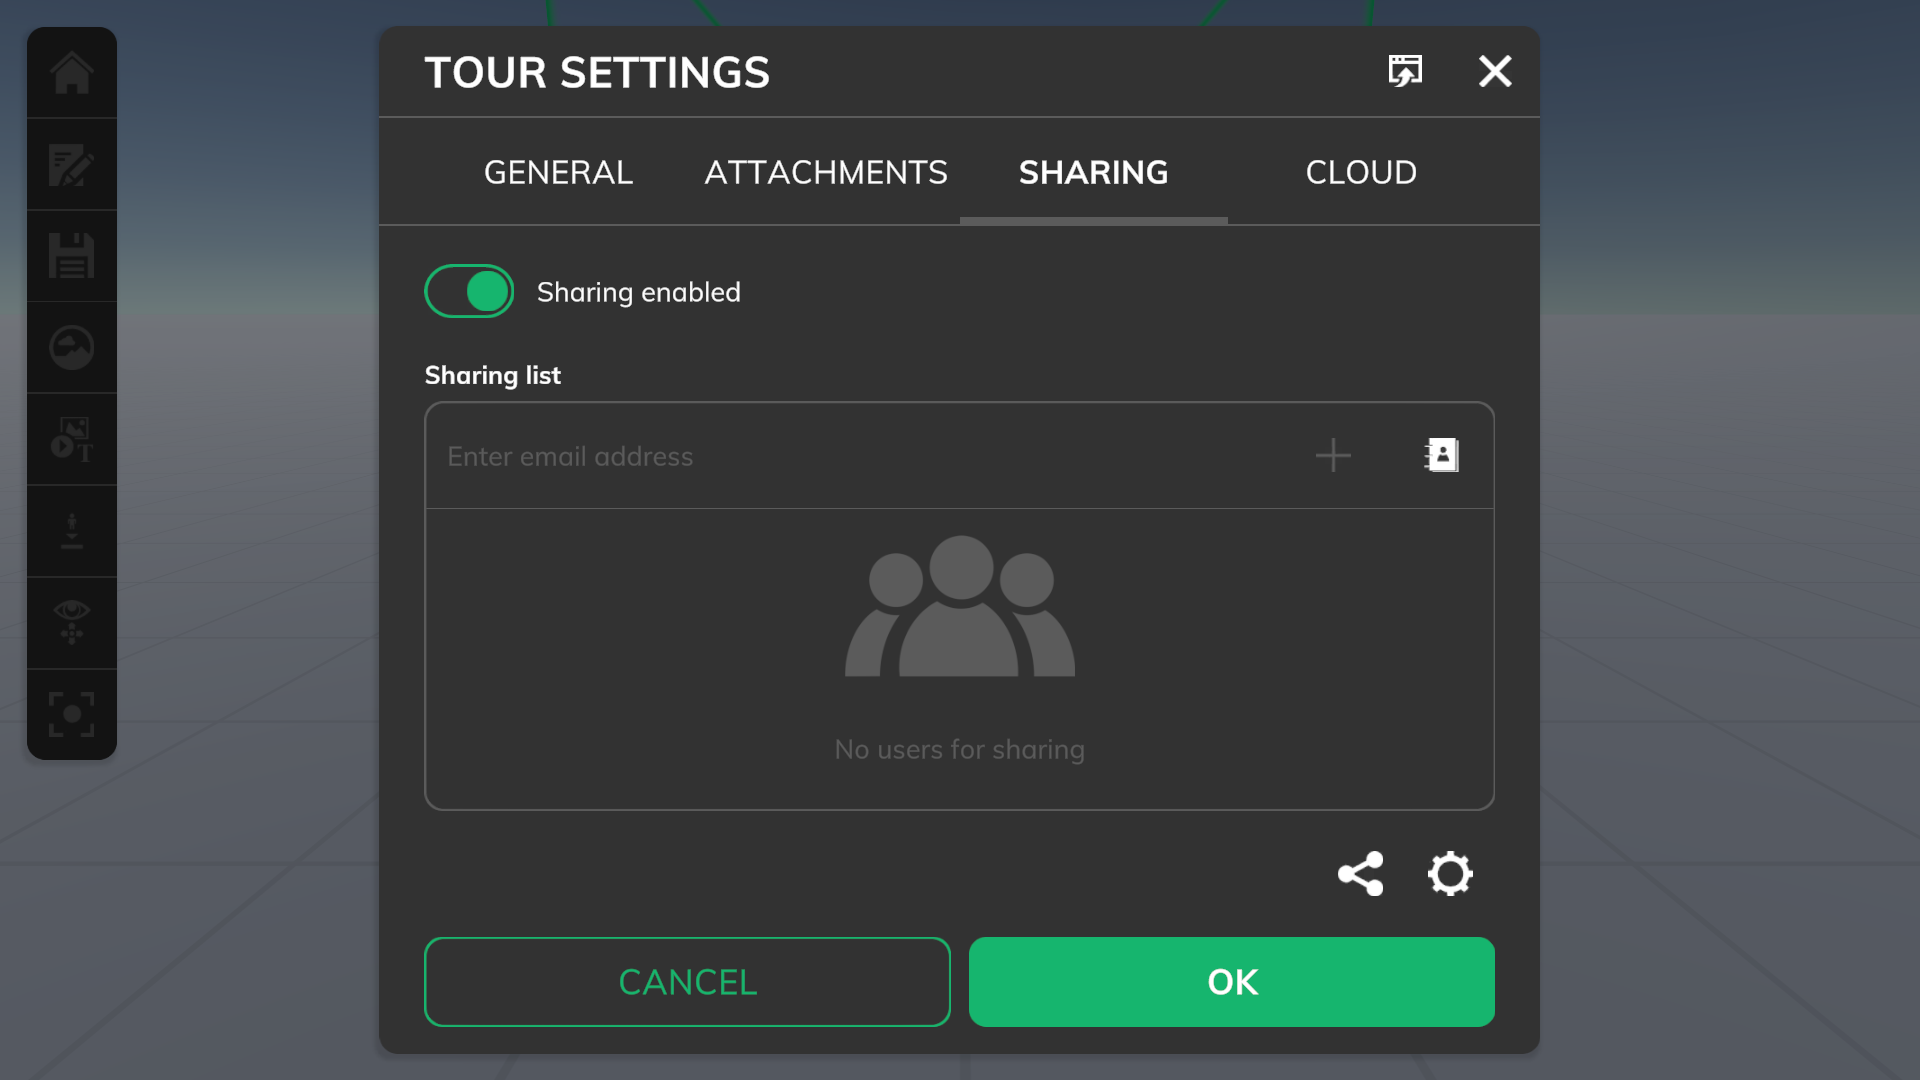 Tour sharing settings